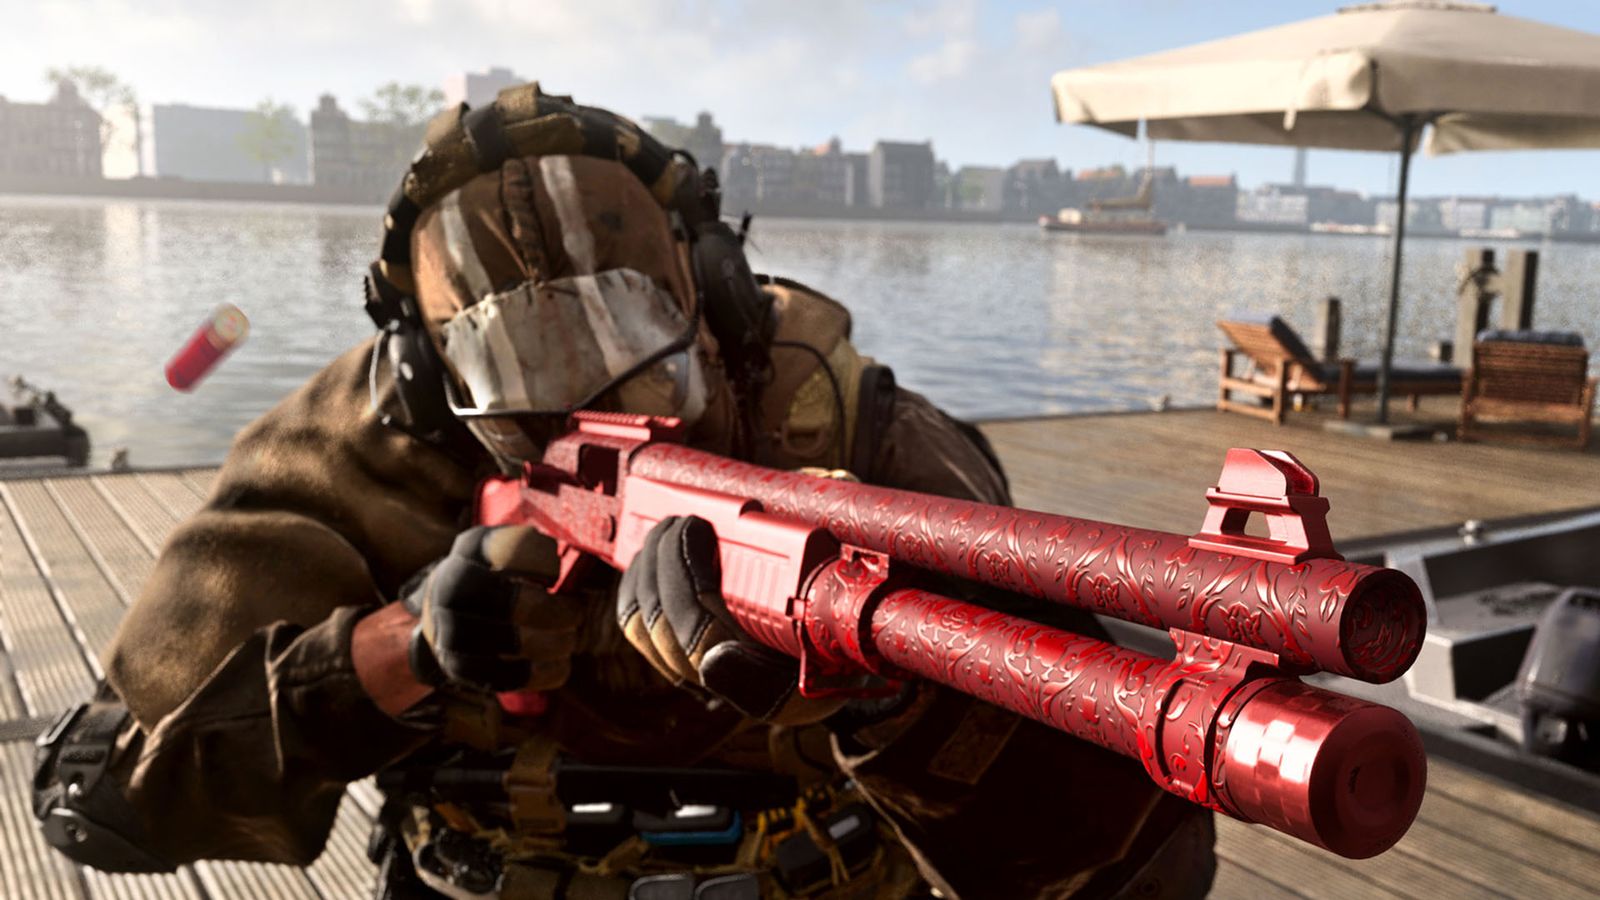 Screenshot of Warzone player aiming down sights of shotgun using red weapon camo